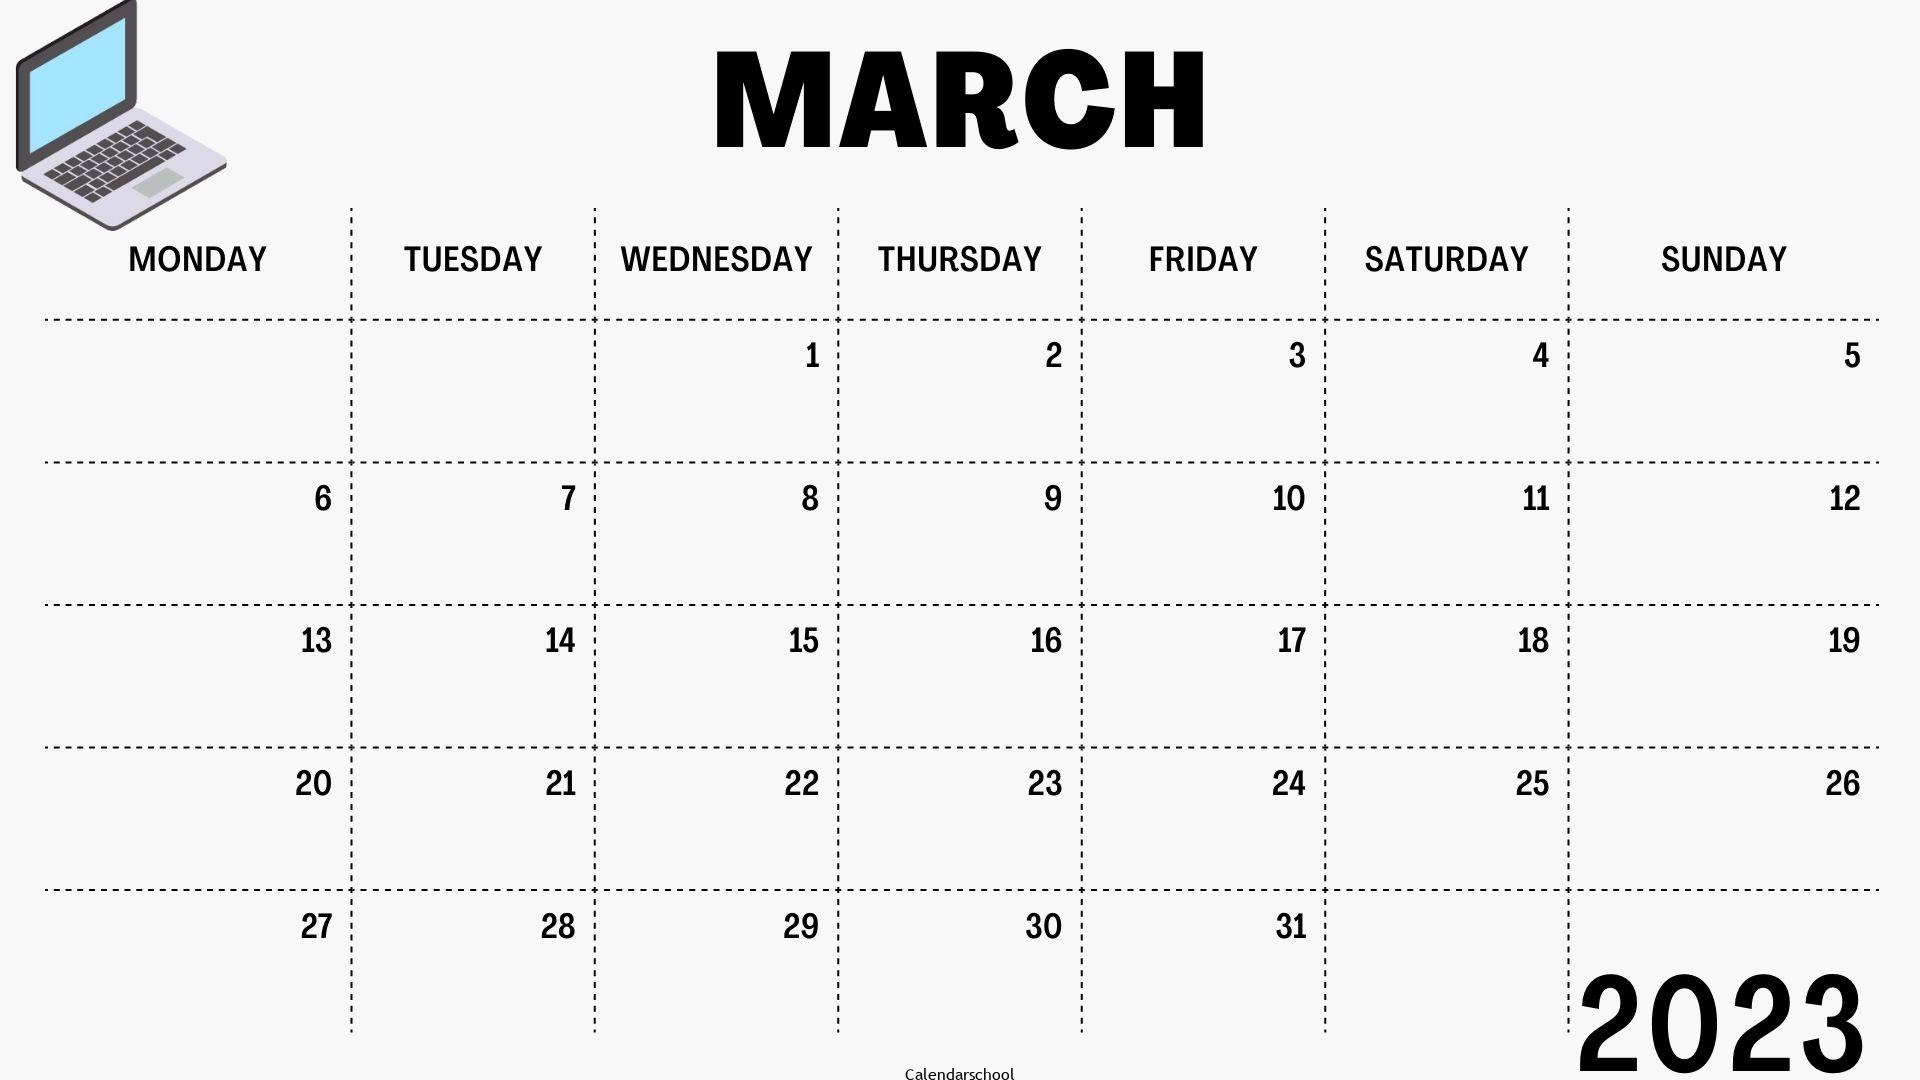 March Calendar 2023 Lunar Full Moon